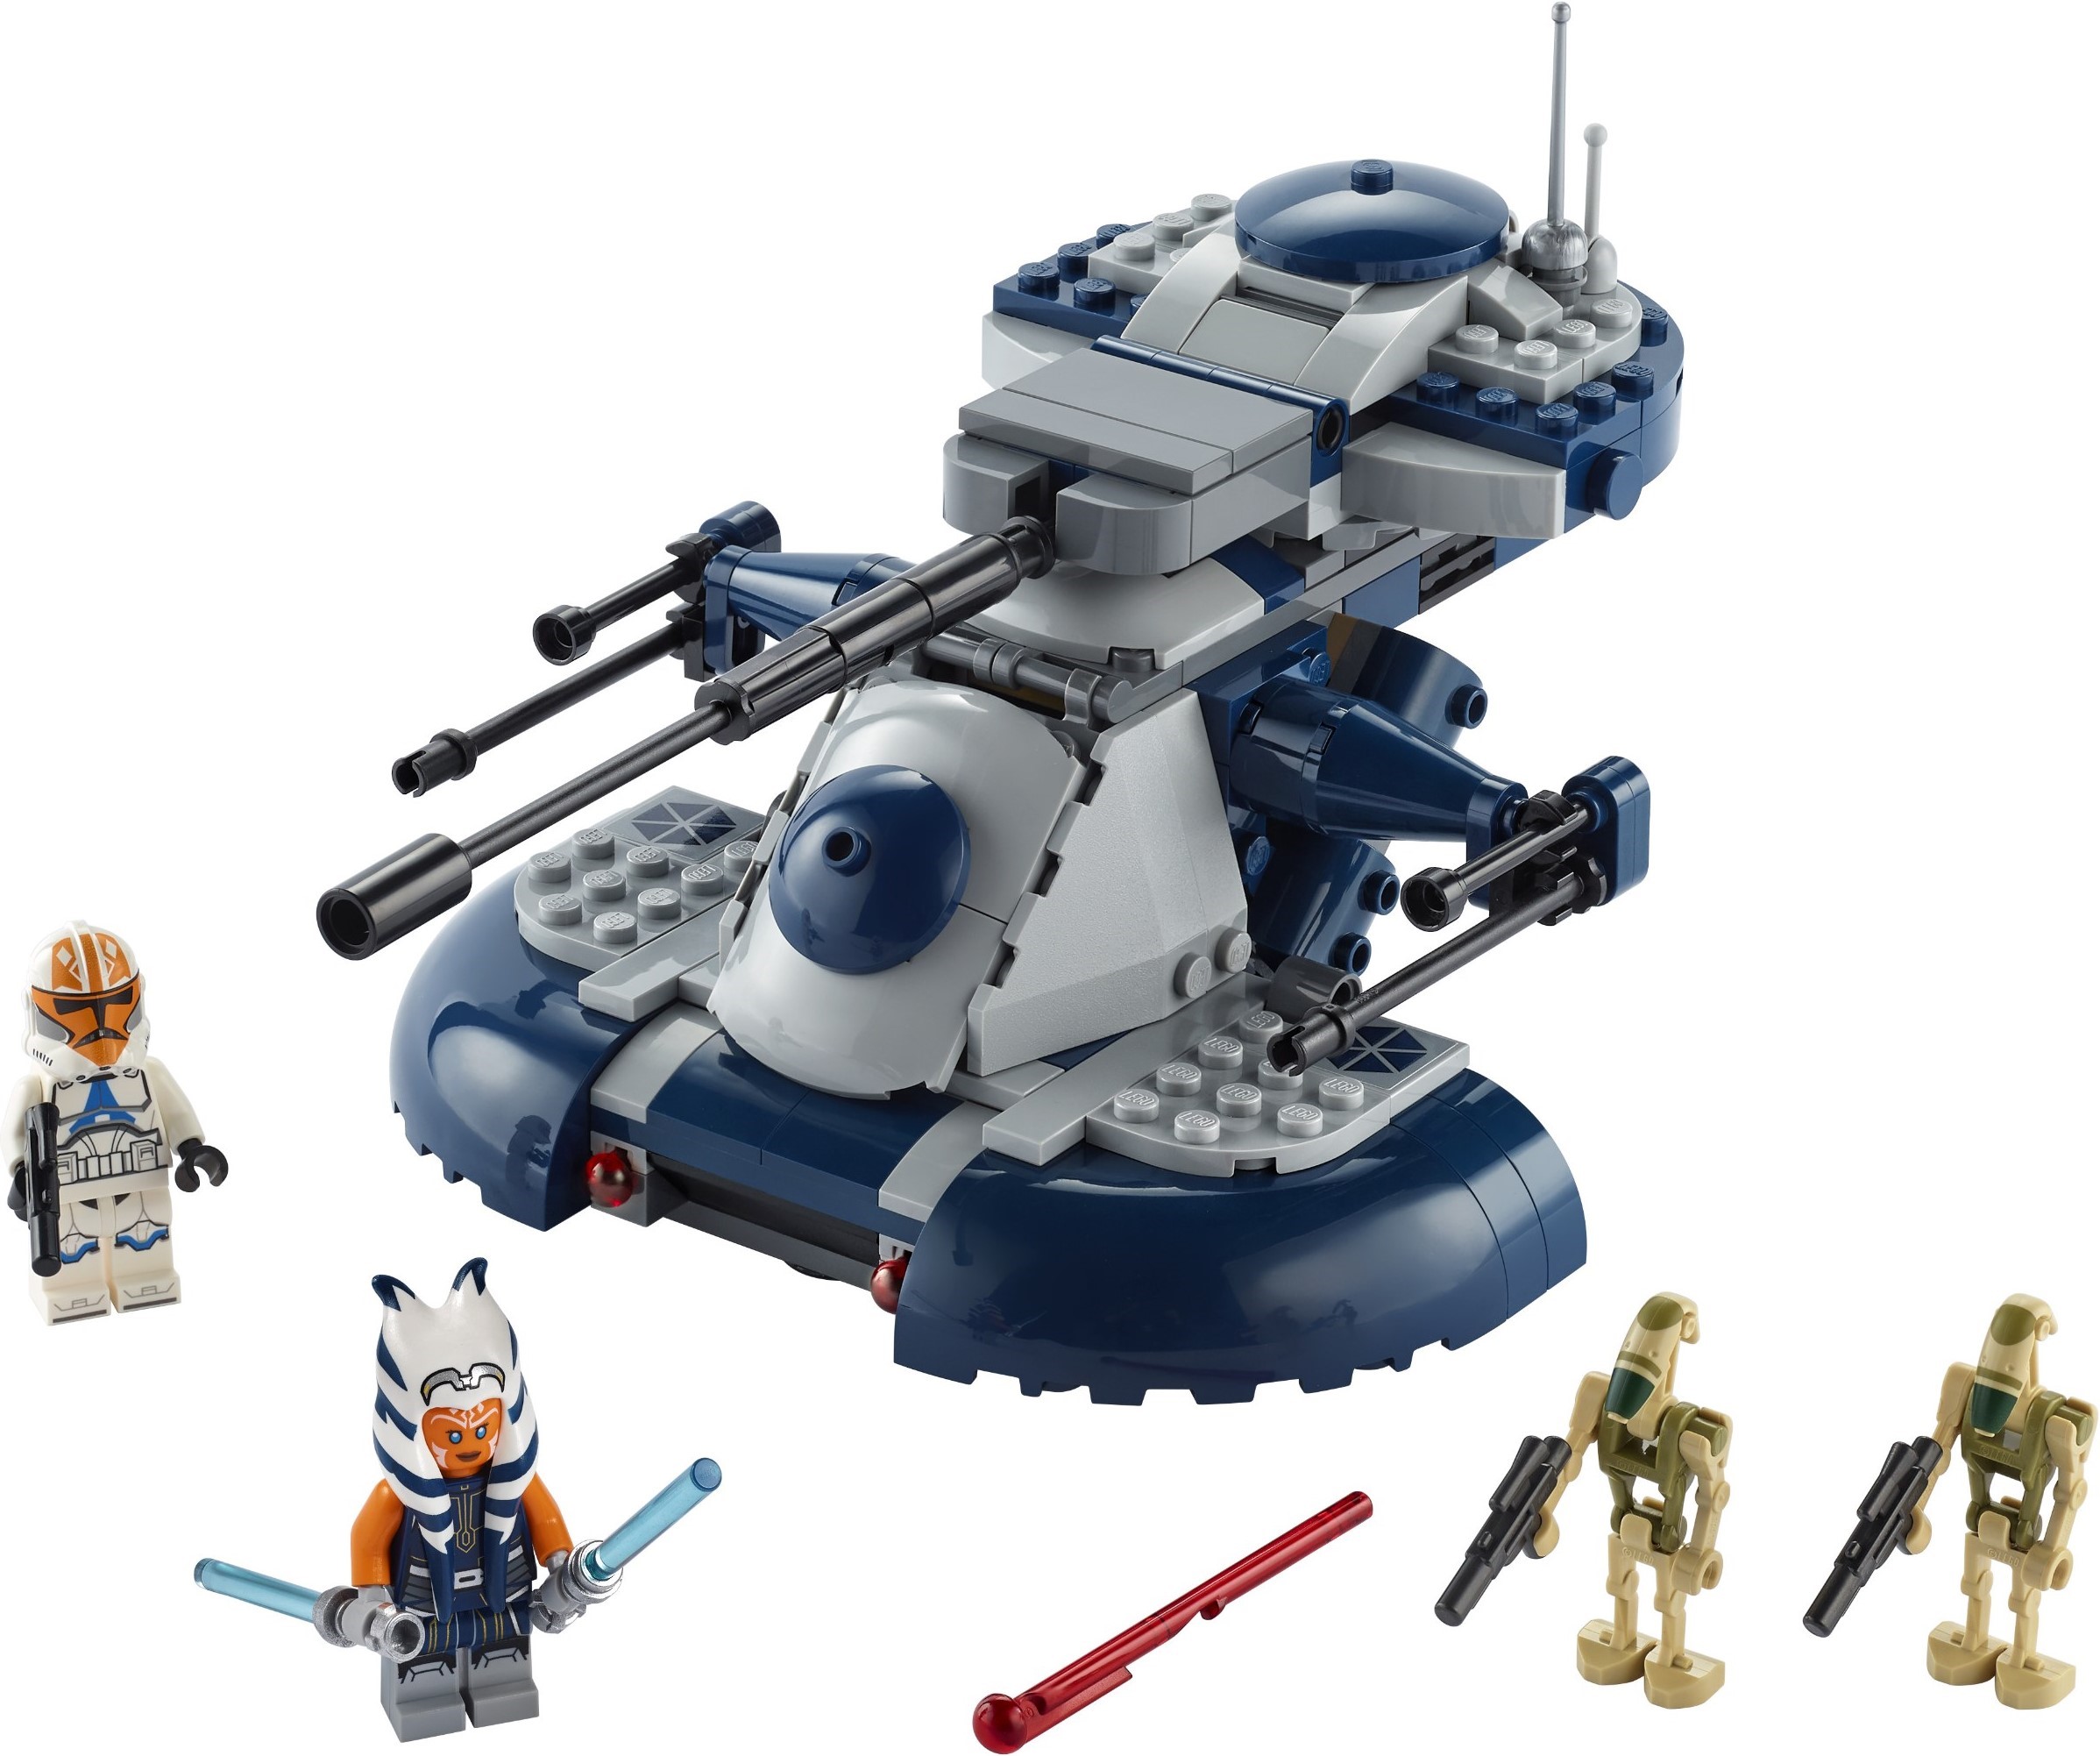 Star Wars | 2020 | Brickset: LEGO guide and